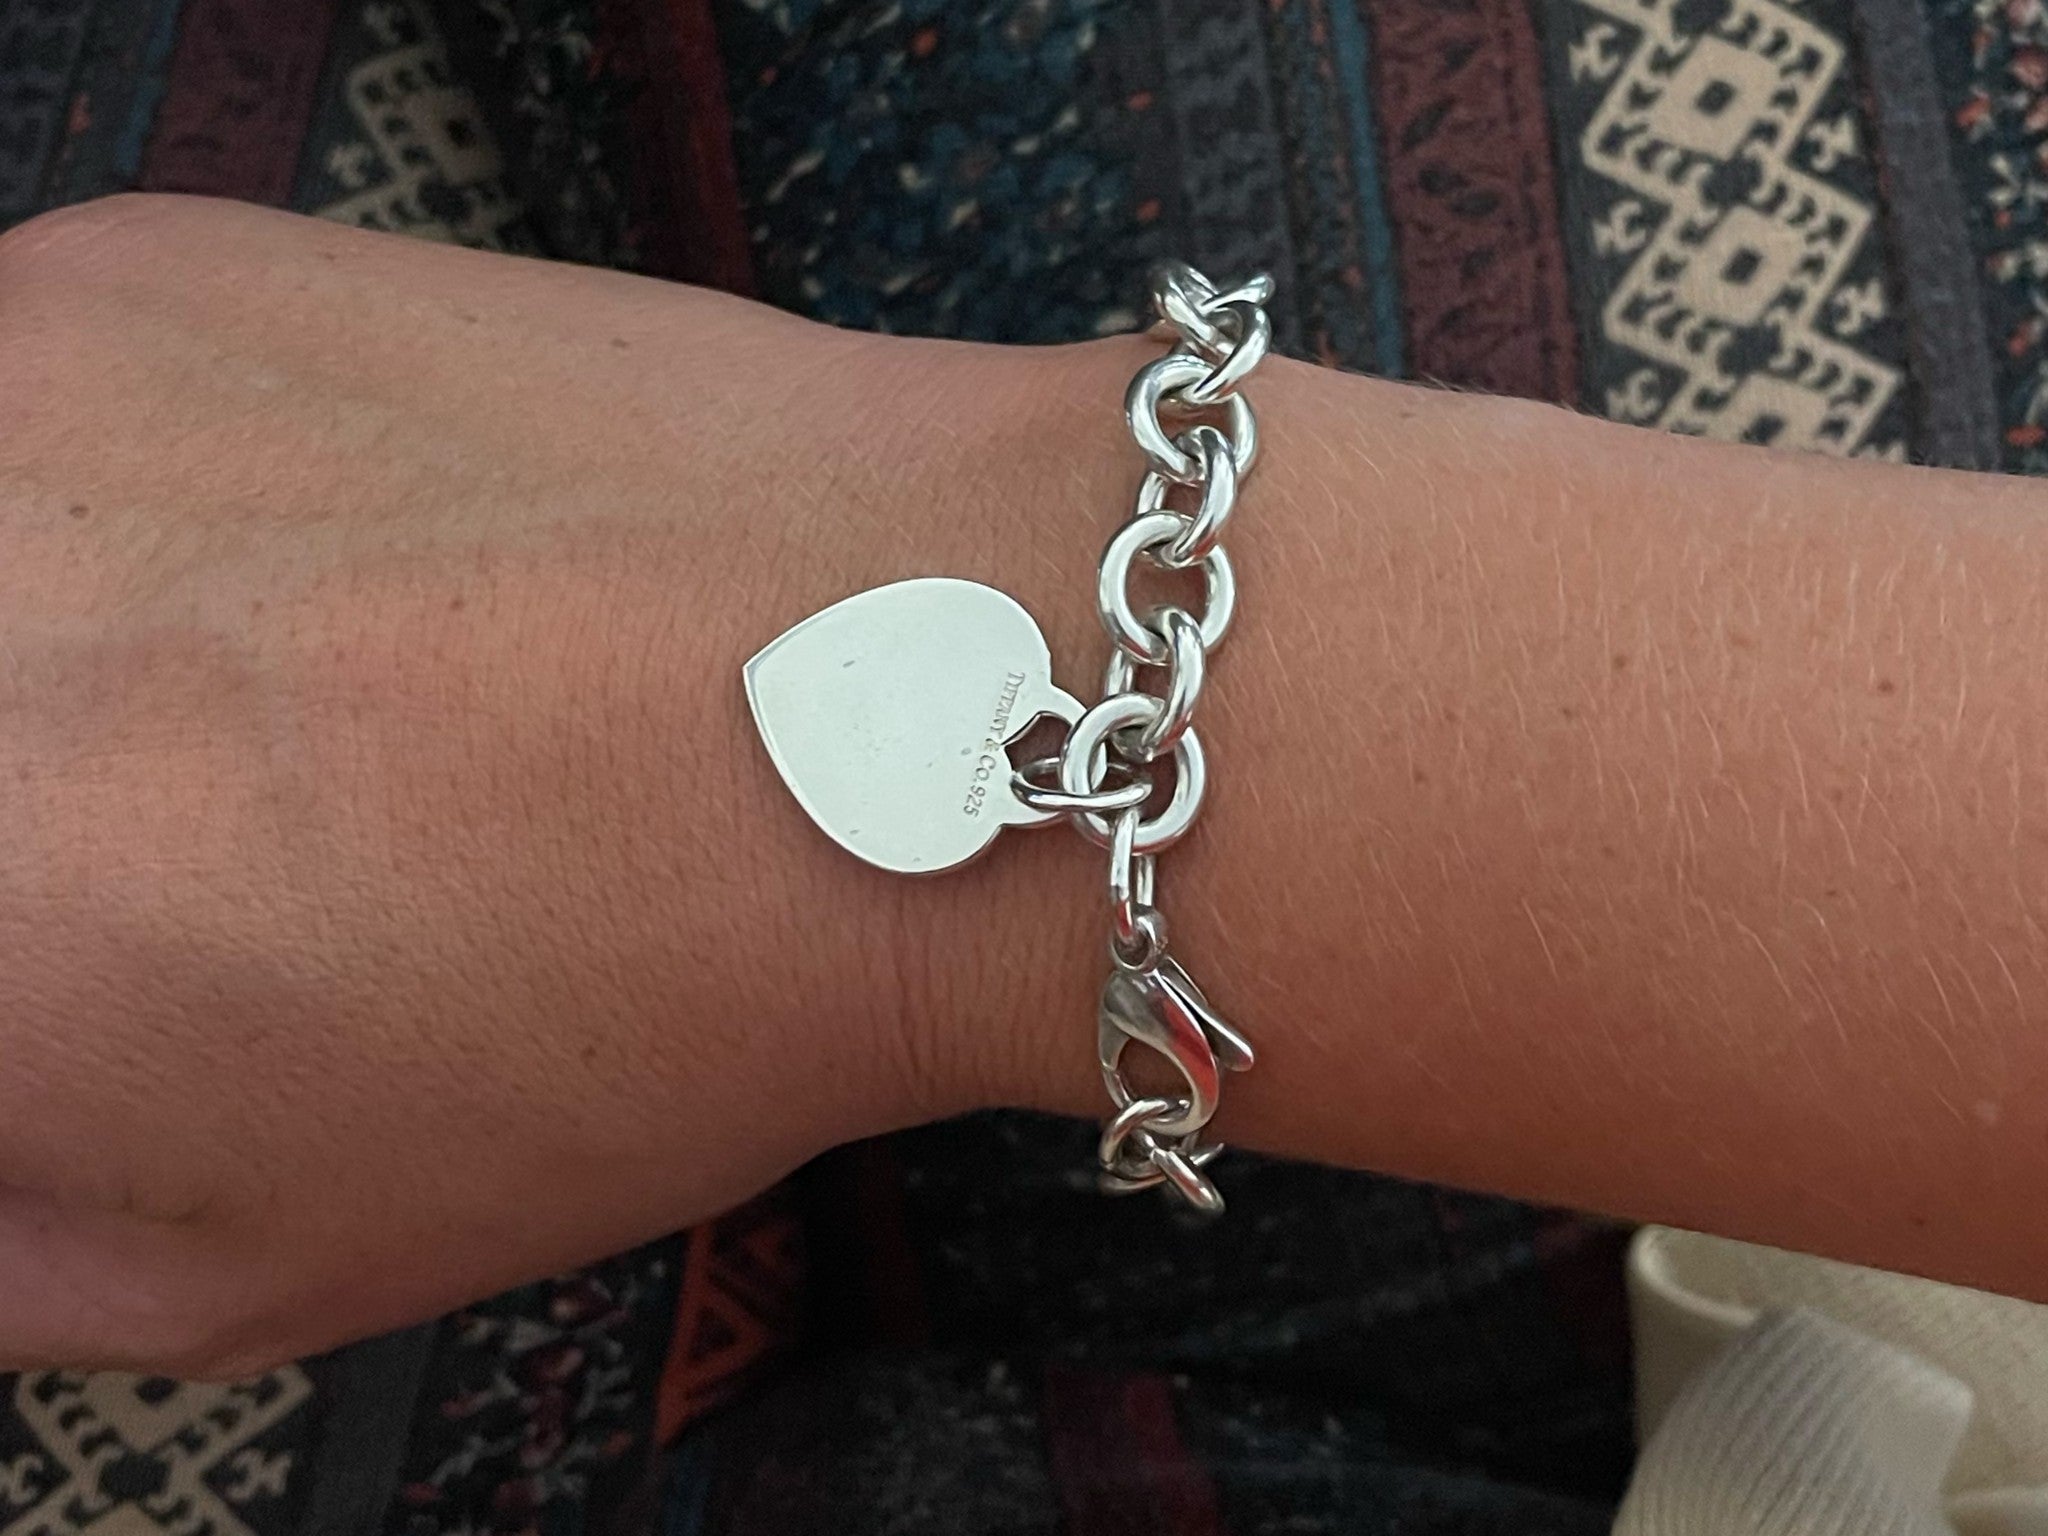 Tiffany & Co. Heart Tag Bracelet in Sterling Silver